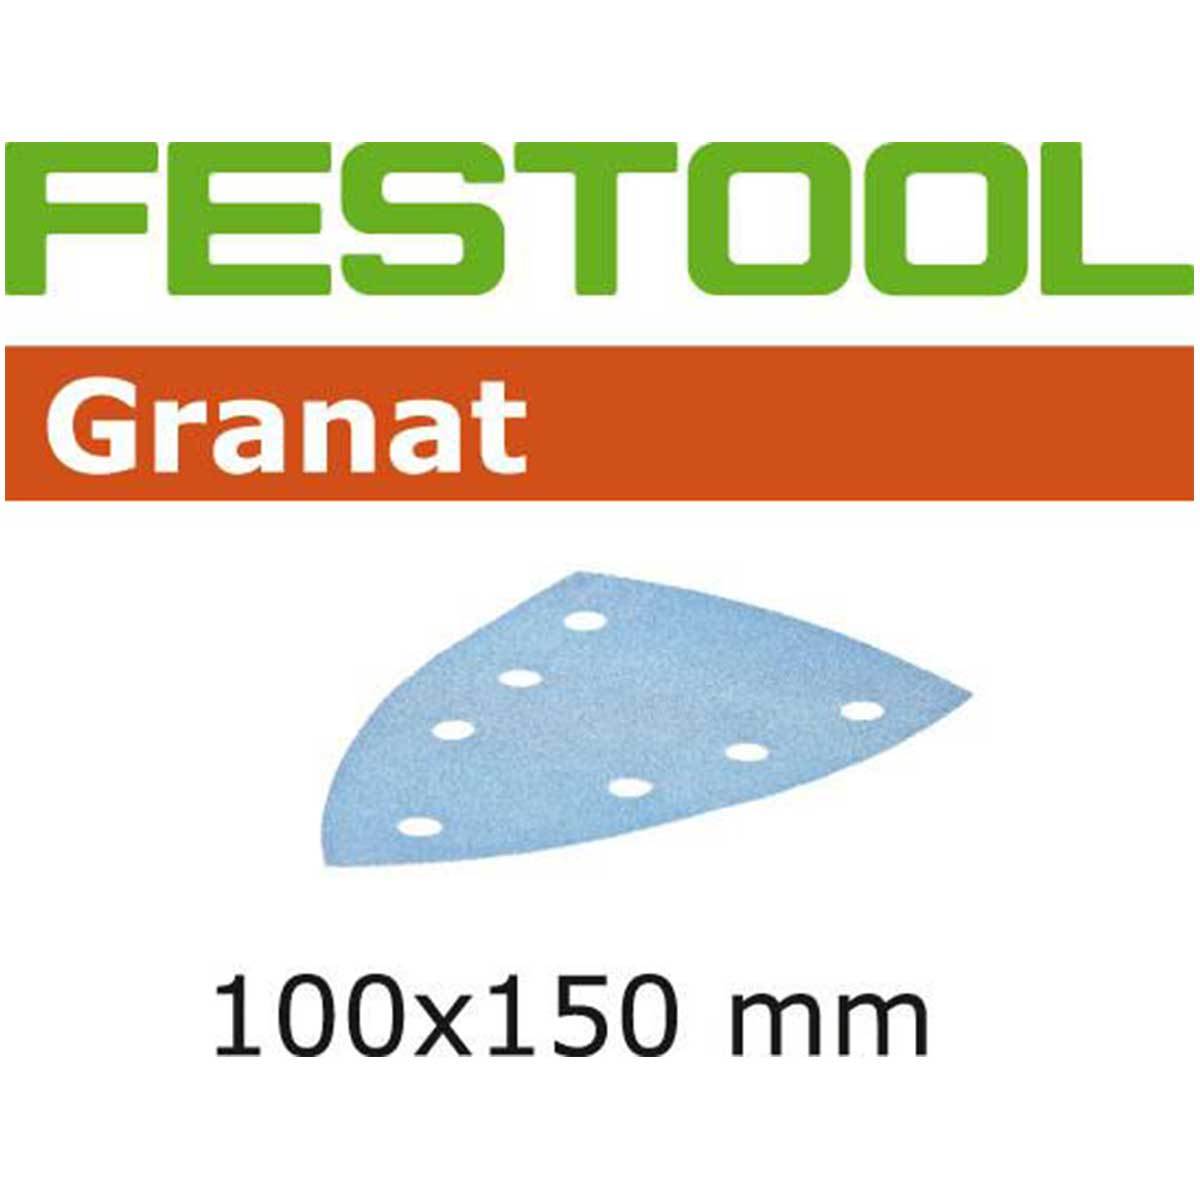 Festool 100x150 millimetre (4x6") Granat StickFix abrasive sheet is an open coat abrasive that resists loading.